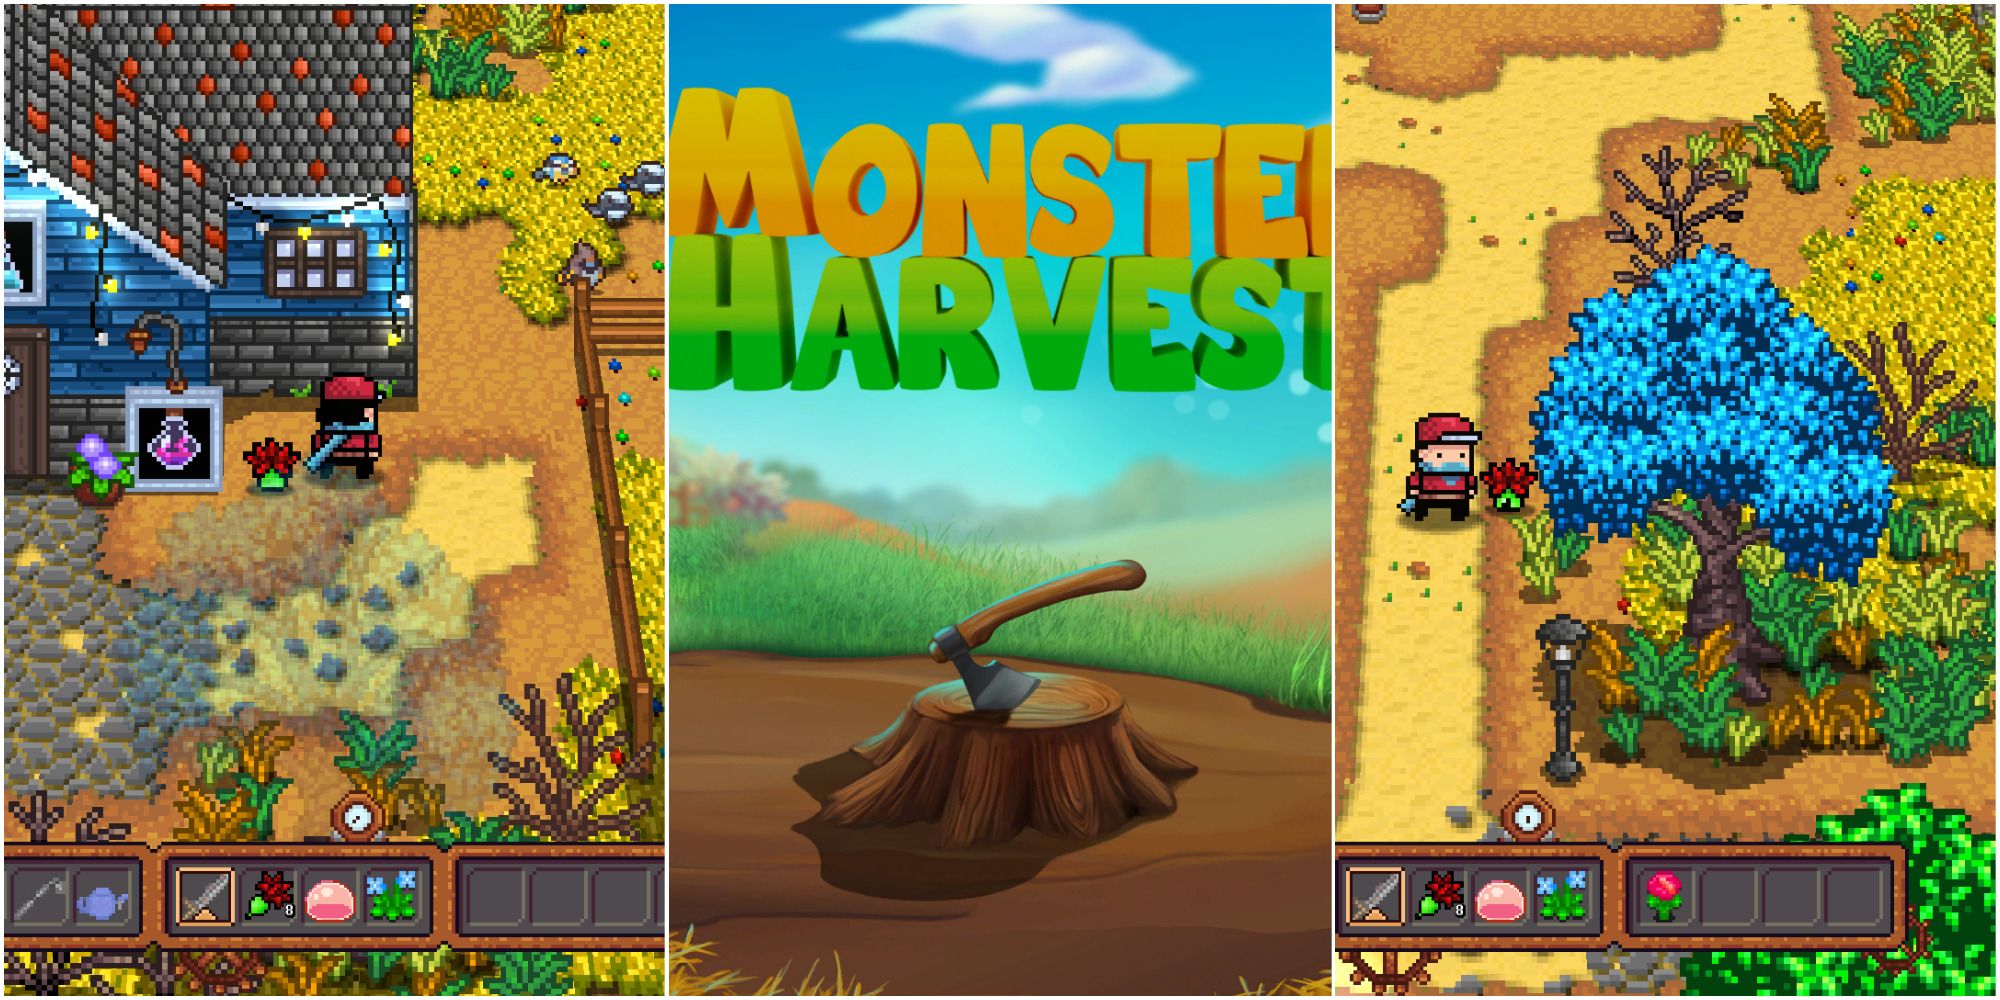 exploring village, monster harvest logo, near saloon featured